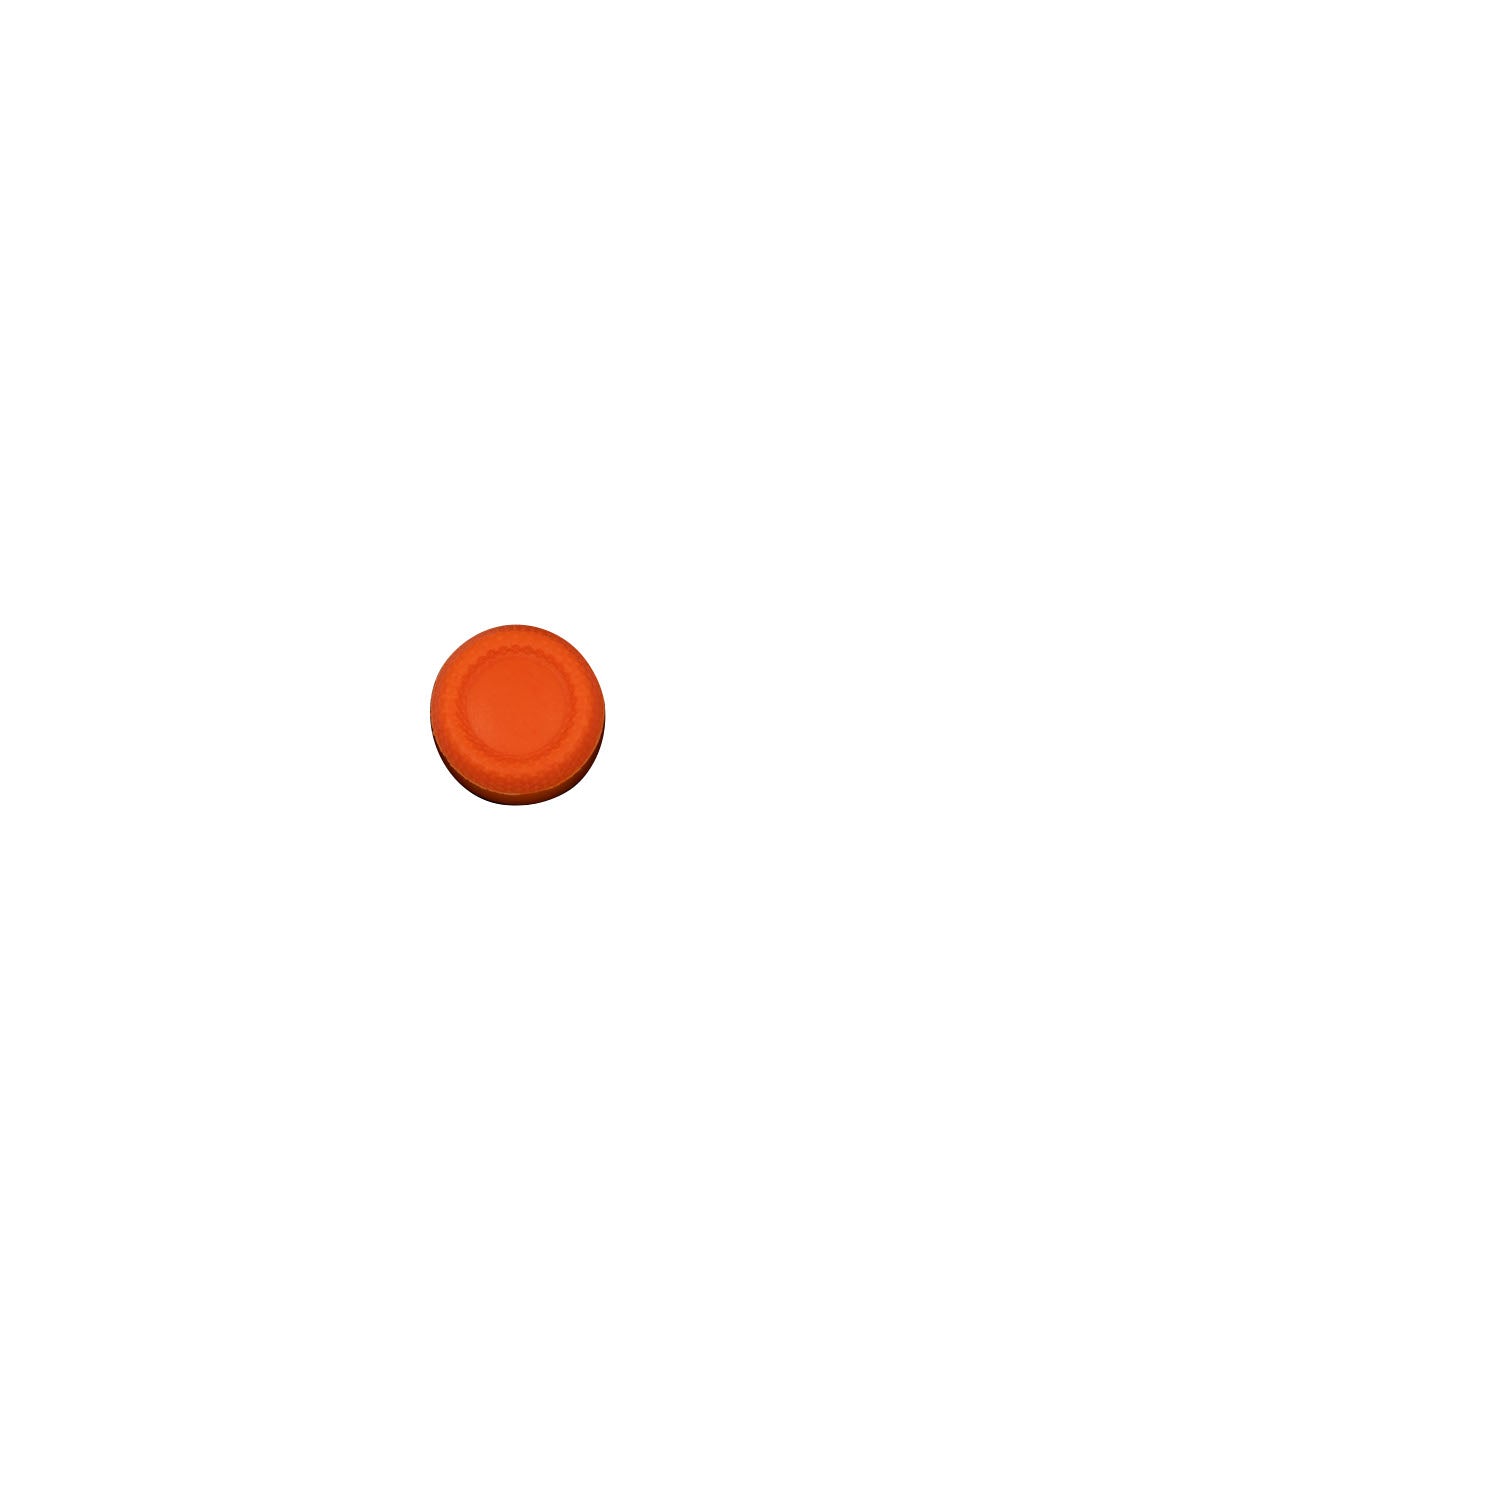 PS4 Solid Thumbstick - Battle Beaver Customs - Solid Orange